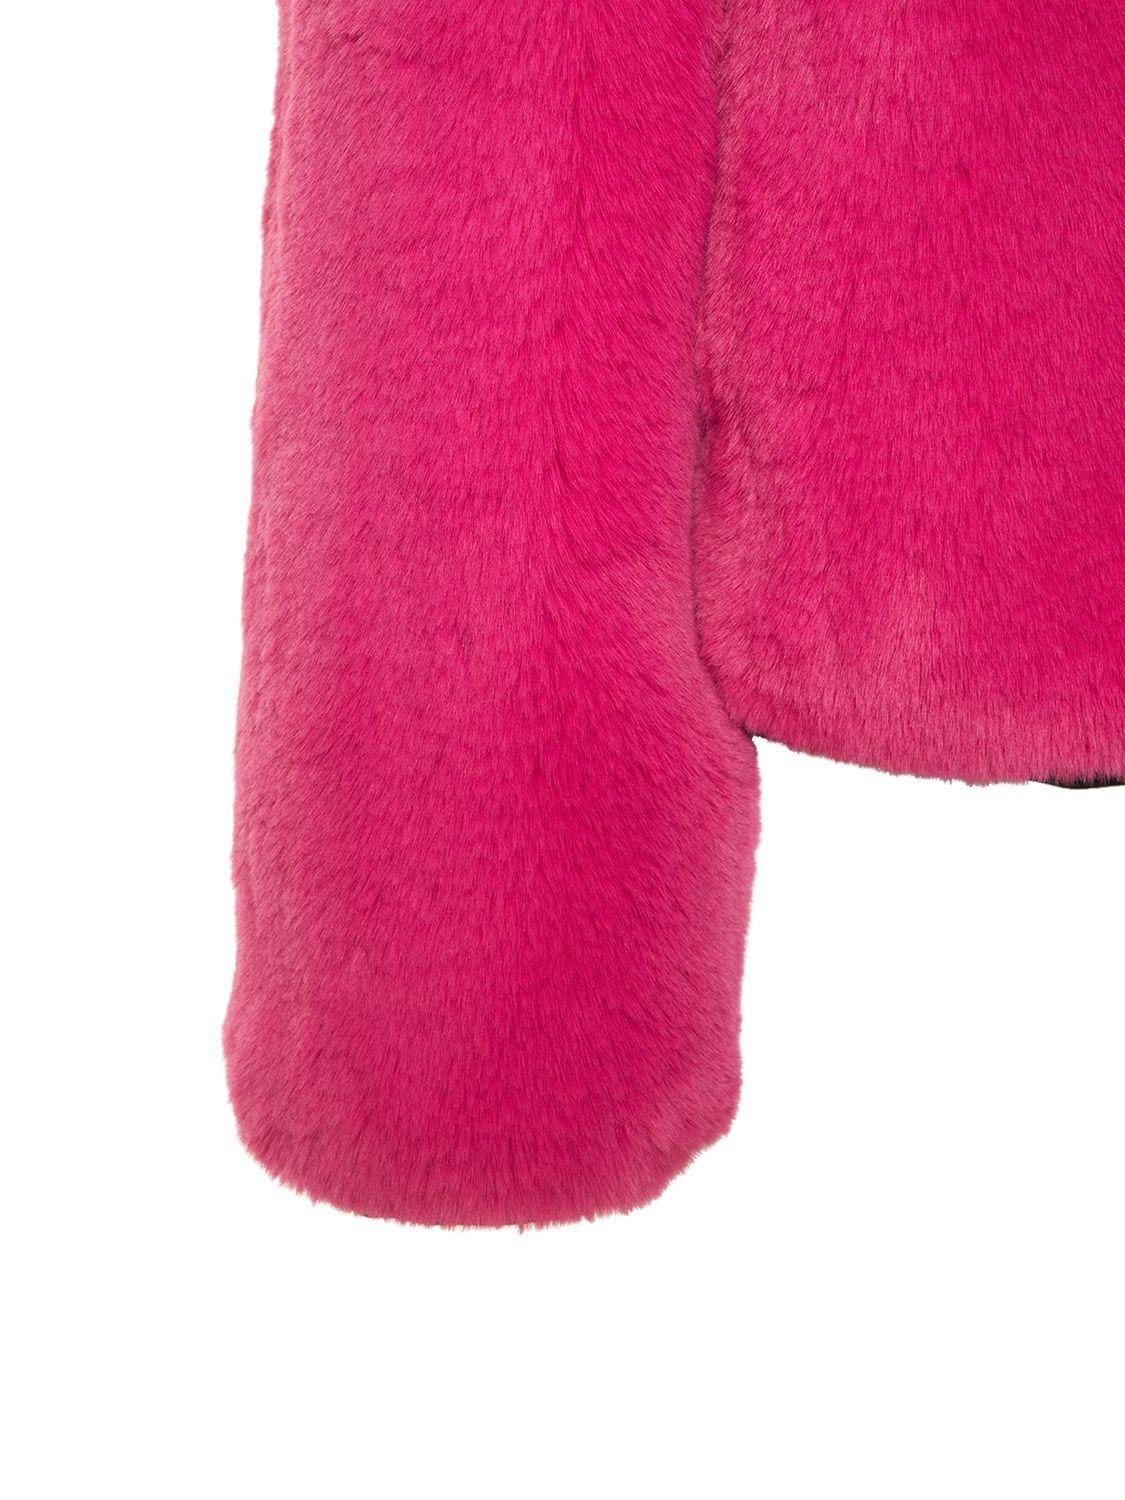 Pink Faux Fur Jacket - The Vic Version